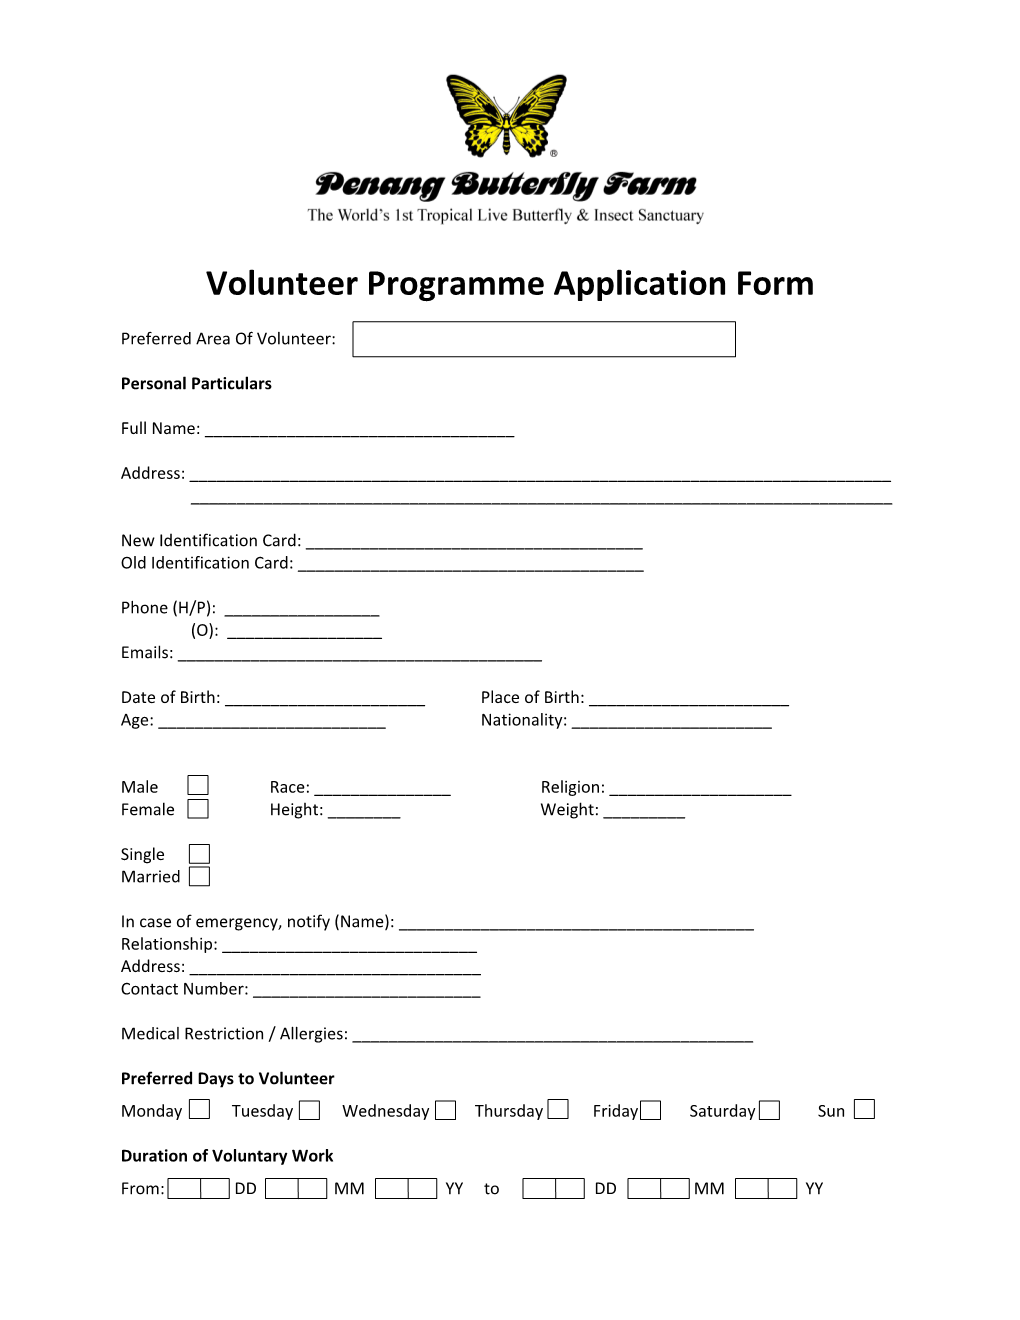 Volunteer Programme Application Form